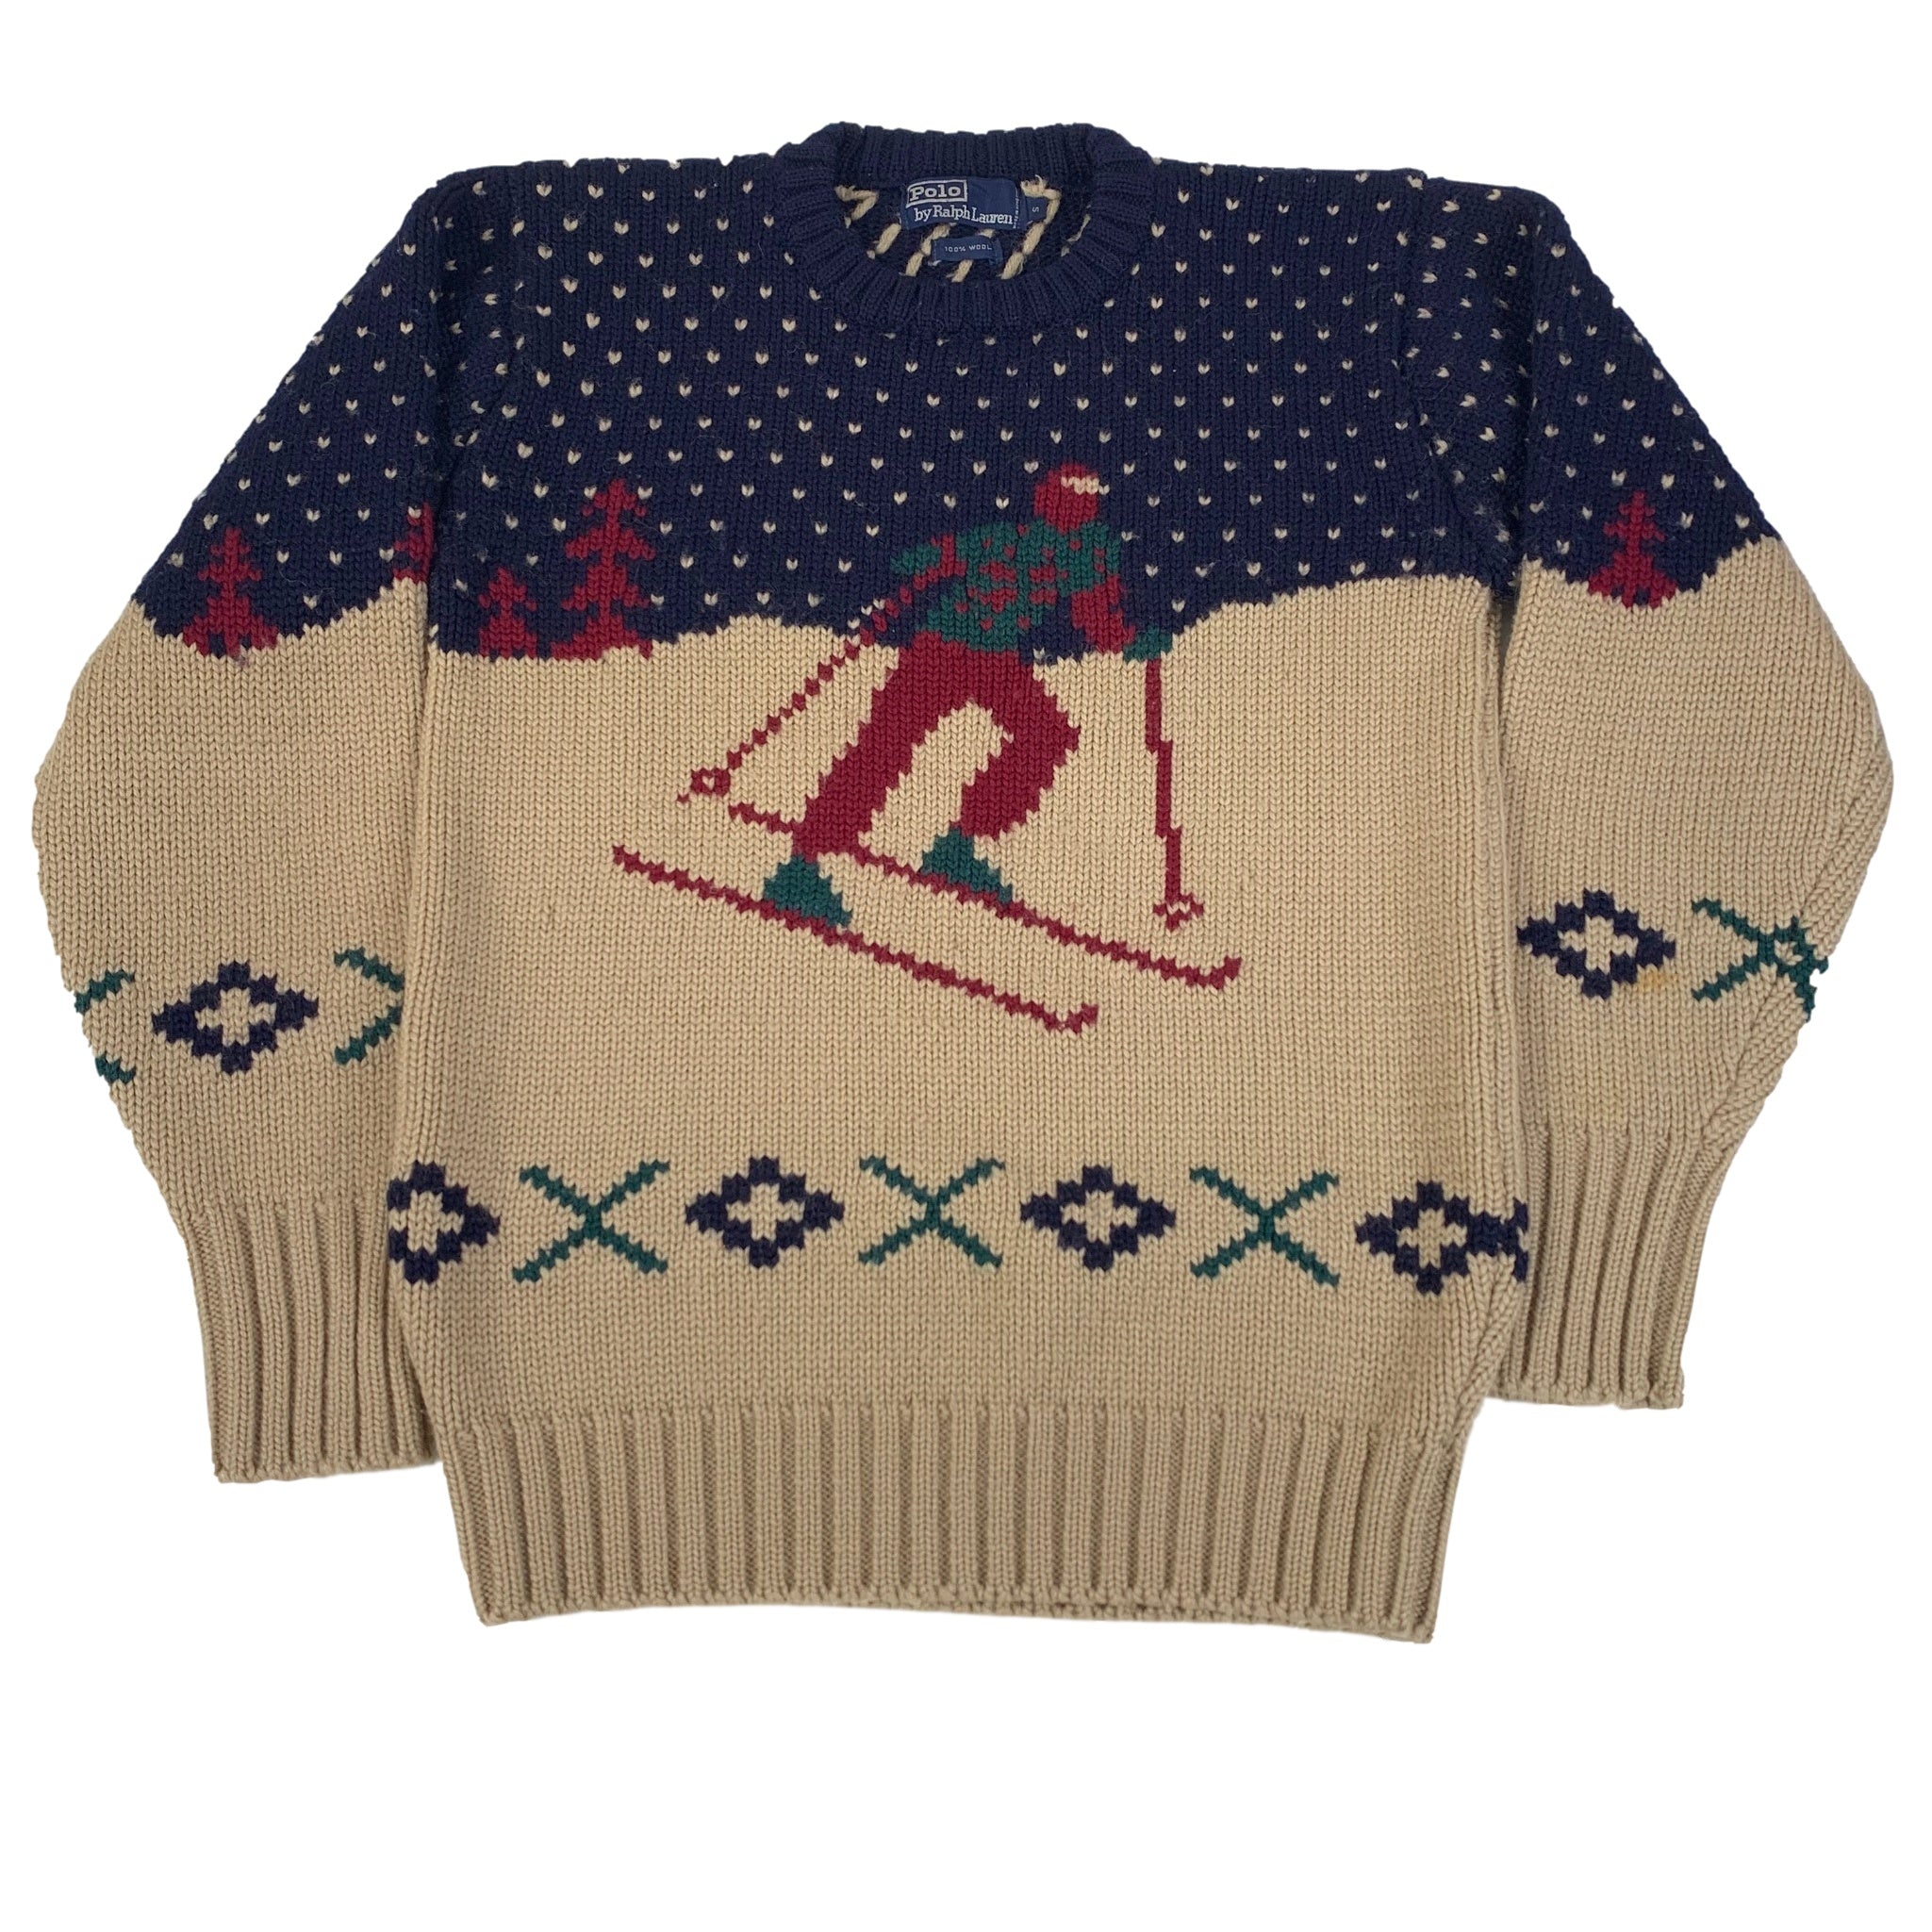 polo ralph lauren ski sweater